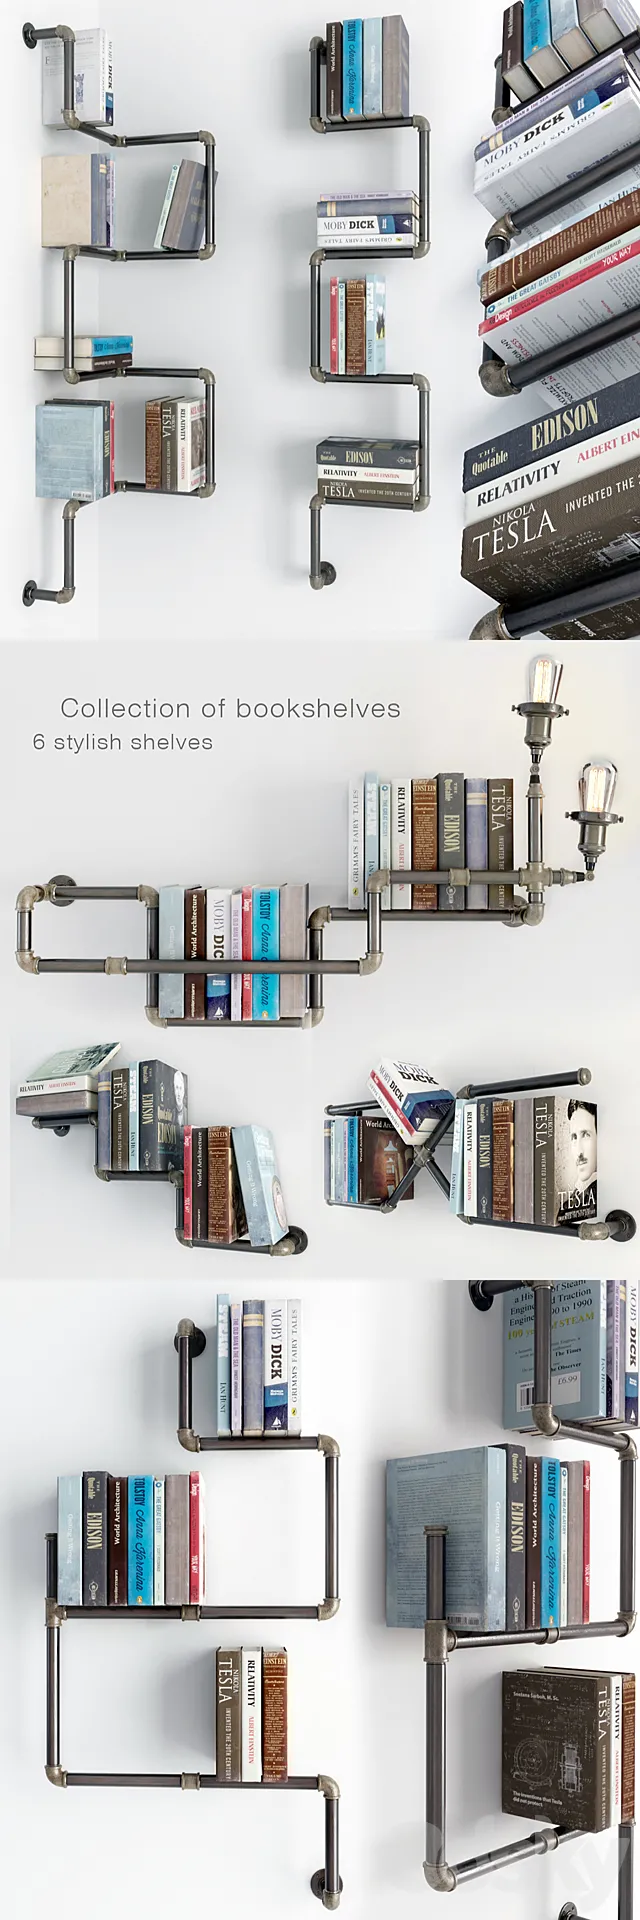 Collection of bookshelves “Stella Bleu” 3DSMax File